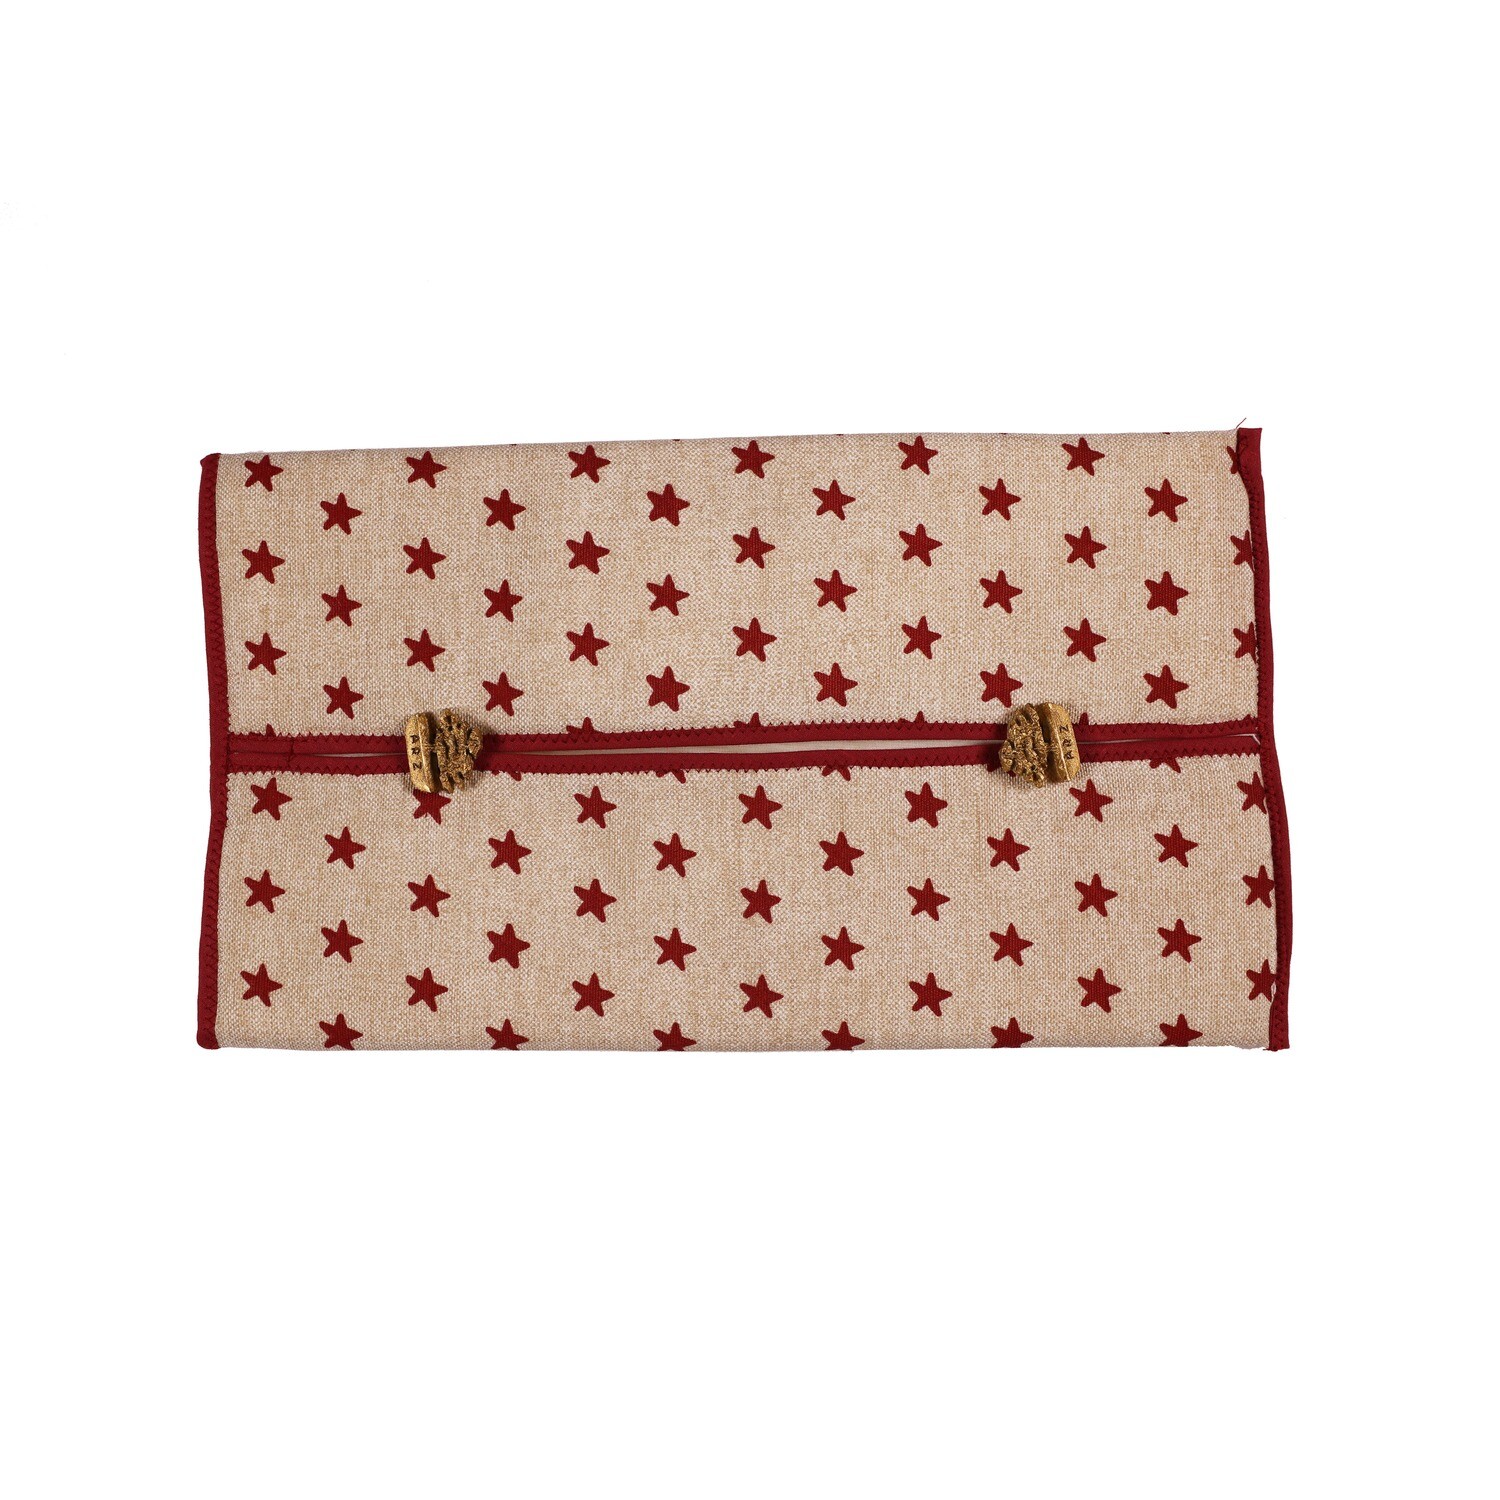 Tissue Box Cover in Christmas Fabric - Kounouz